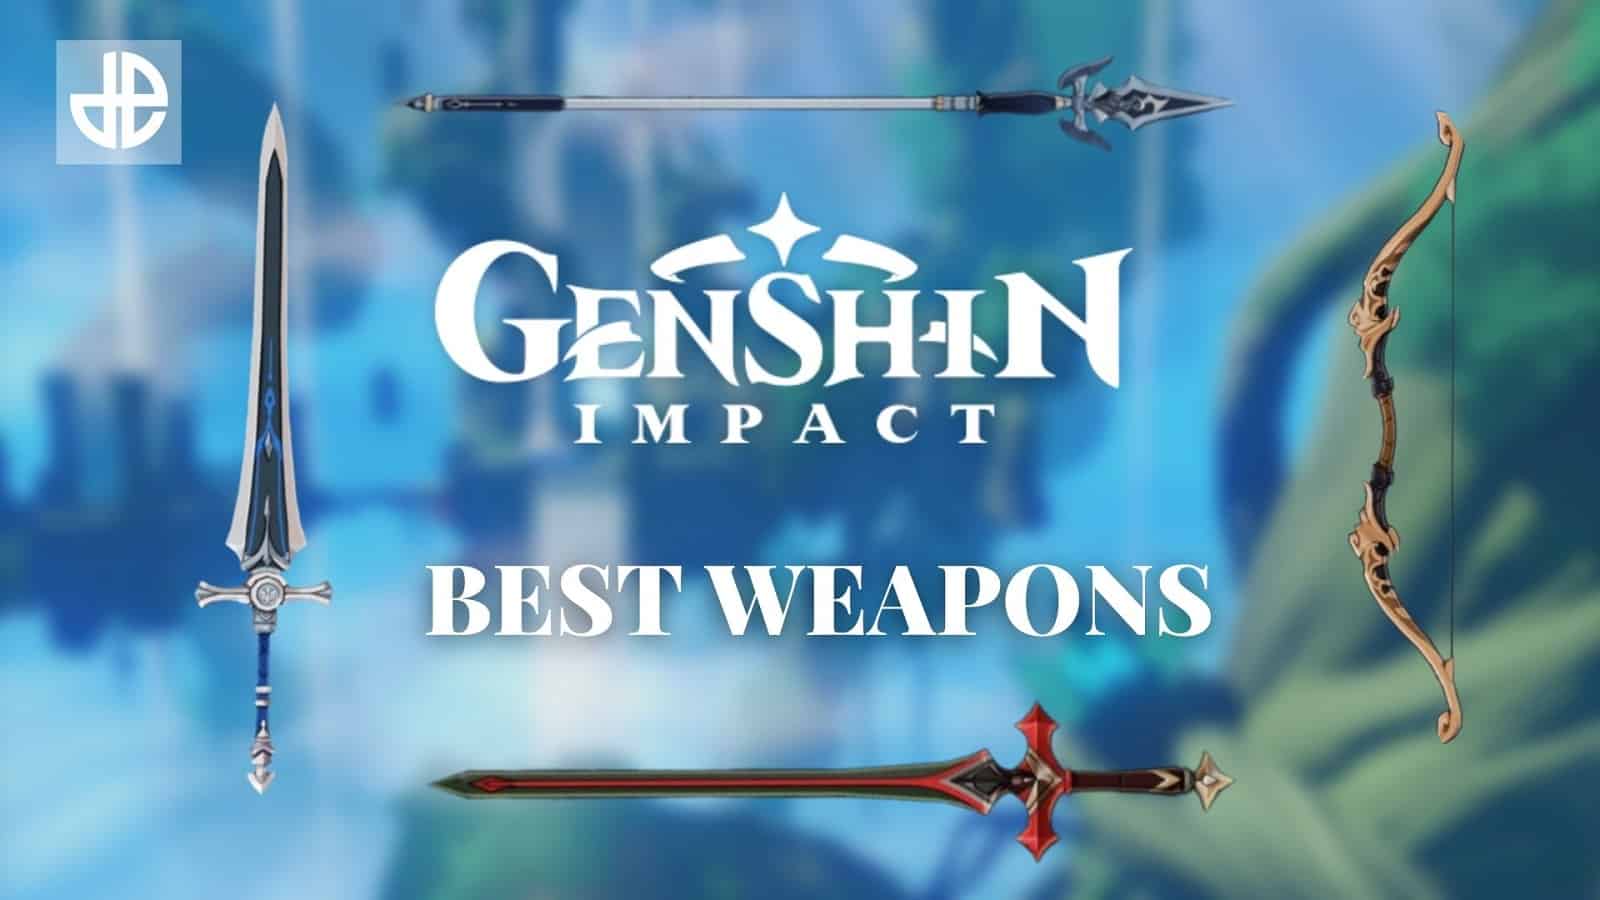 How to get Three Amazing Weapons FREE: Genshin Impact 